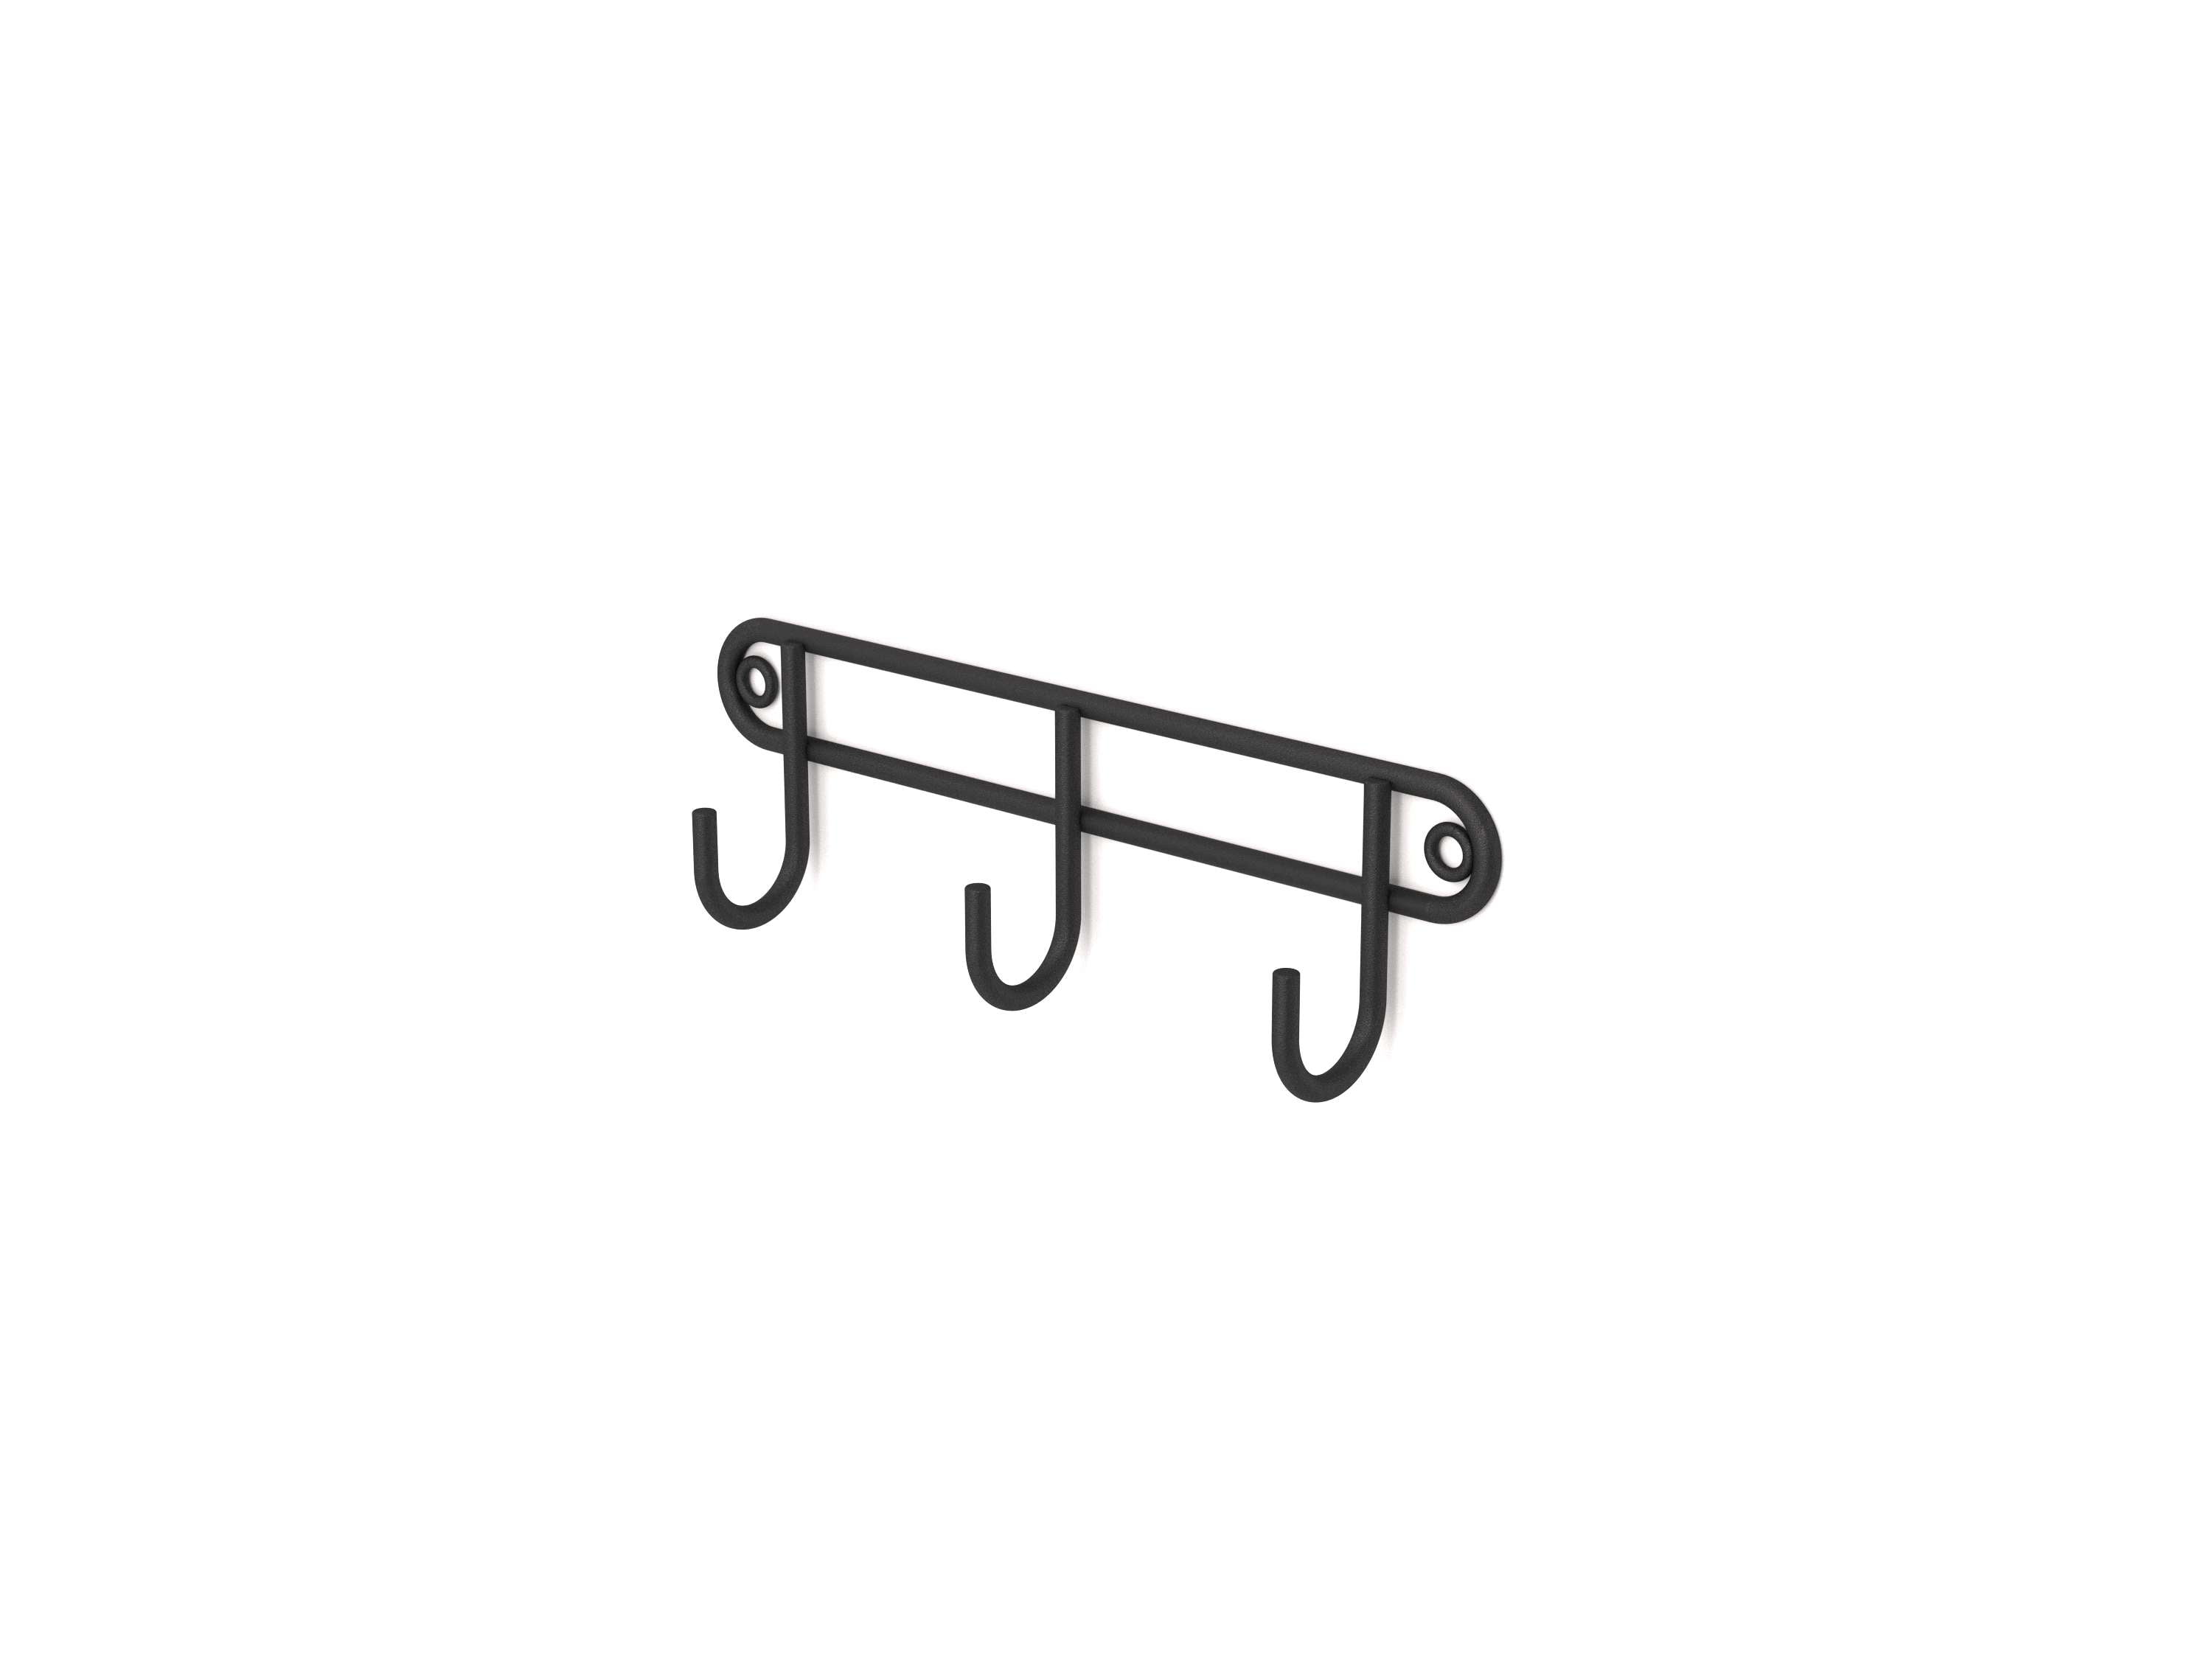 Three hook stainless steel rack useful for utensils, keys, dish